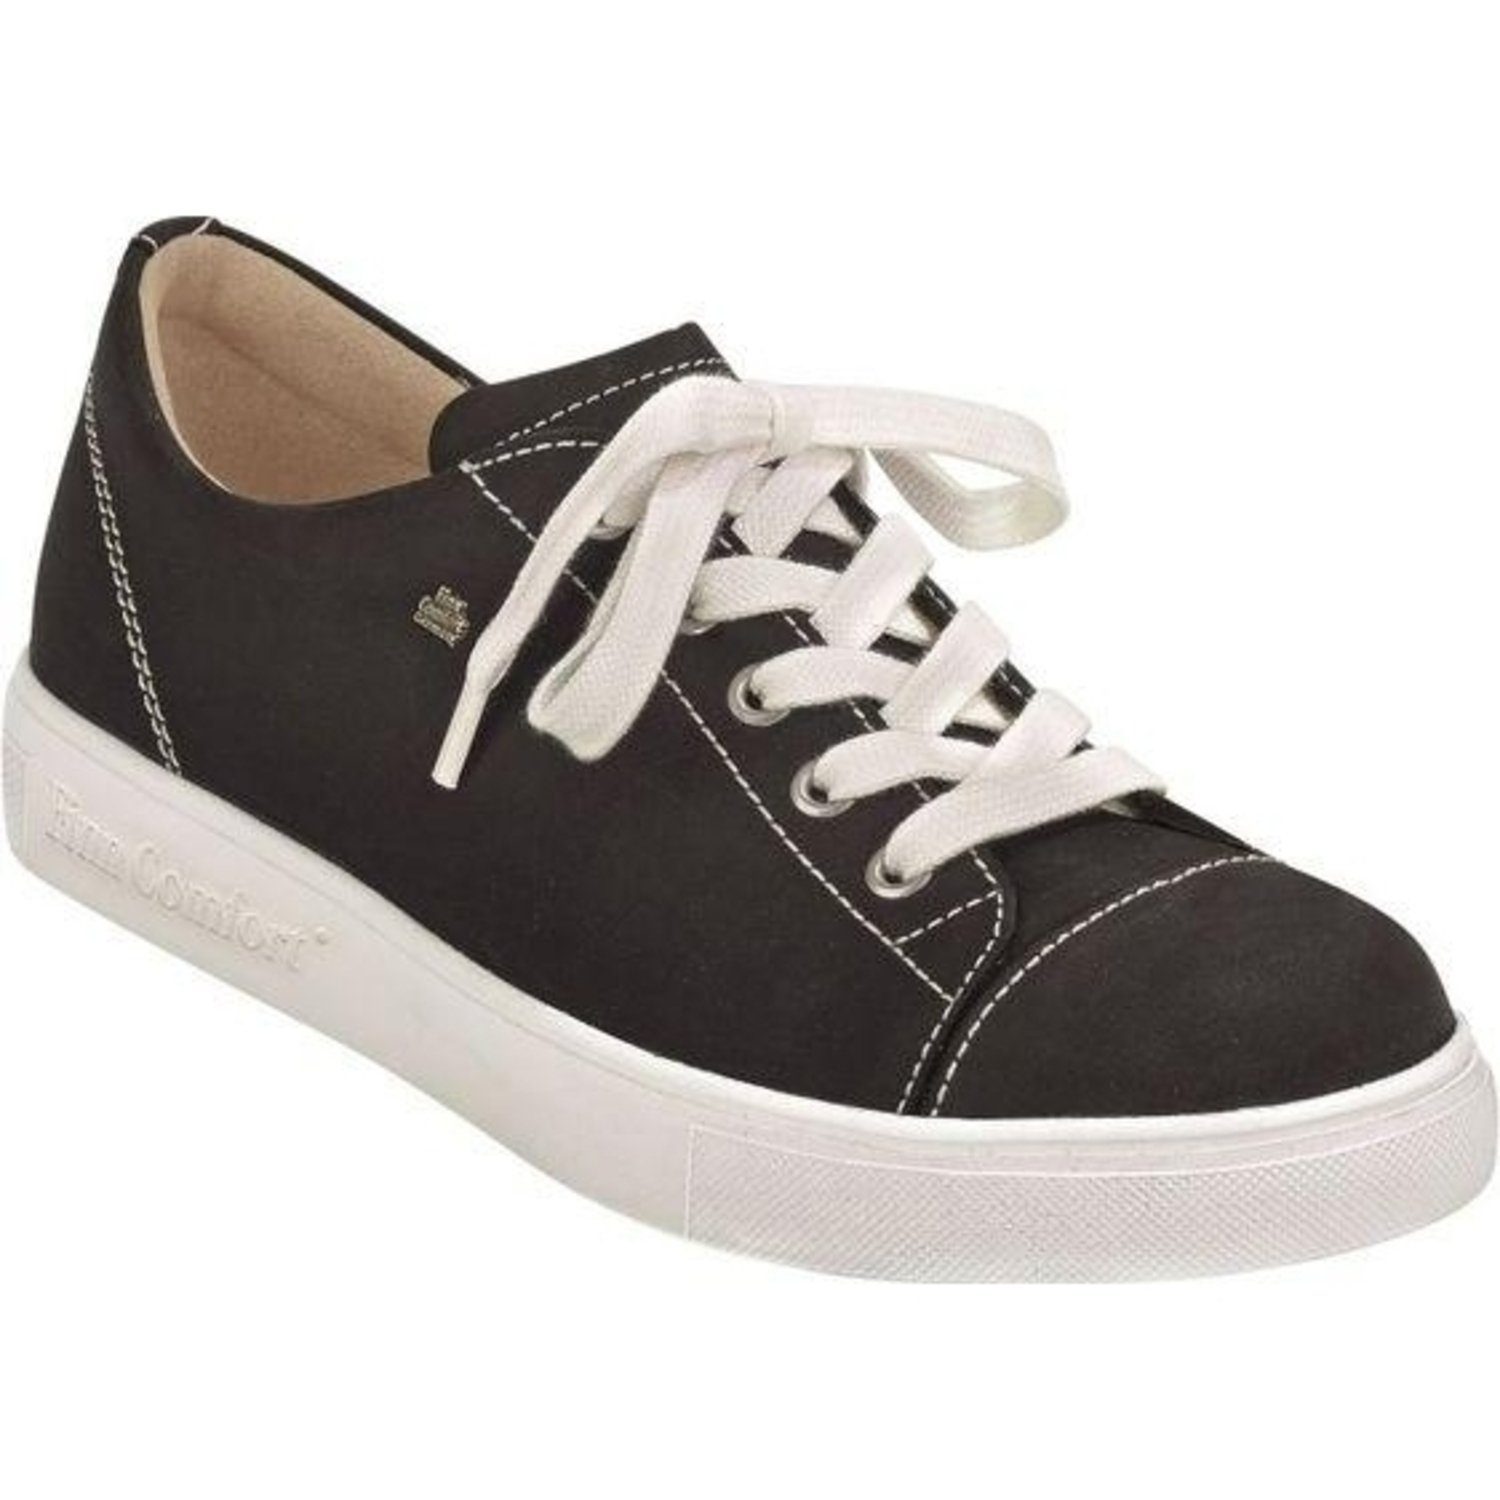 Finn Comfort Sneaker online kaufen | OTTO